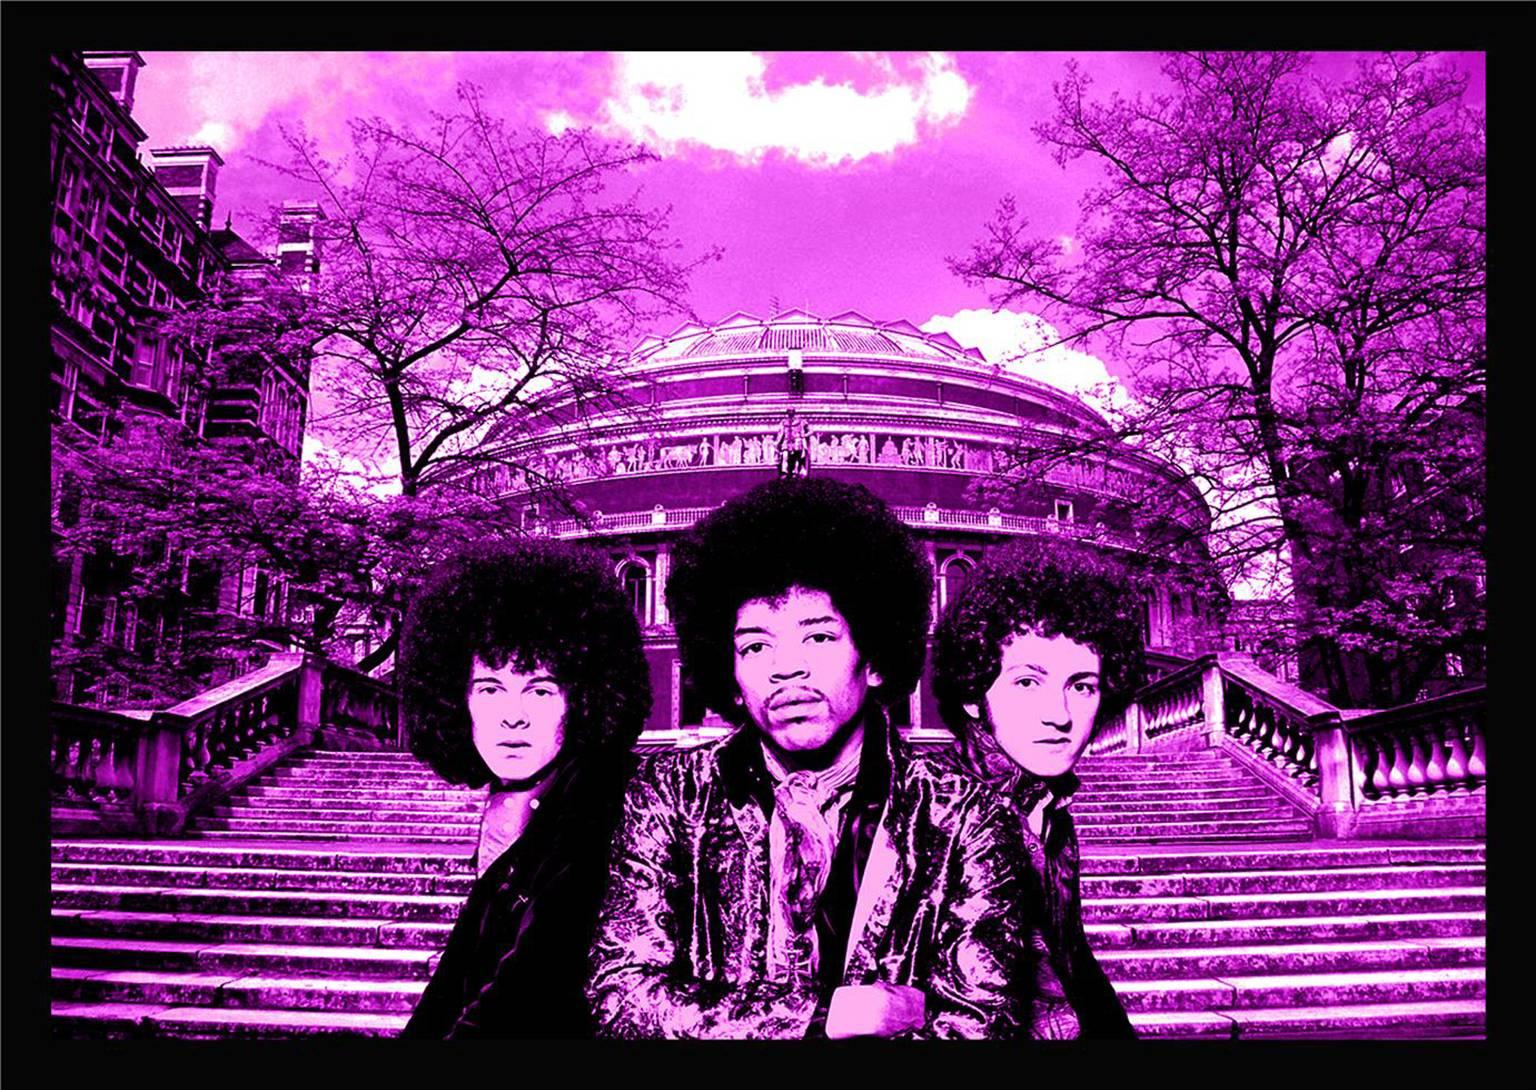 Karl Ferris Portrait Photograph - The Jimi Hendrix Experience, "Purple Haze" Poster Portrait, London, 1967